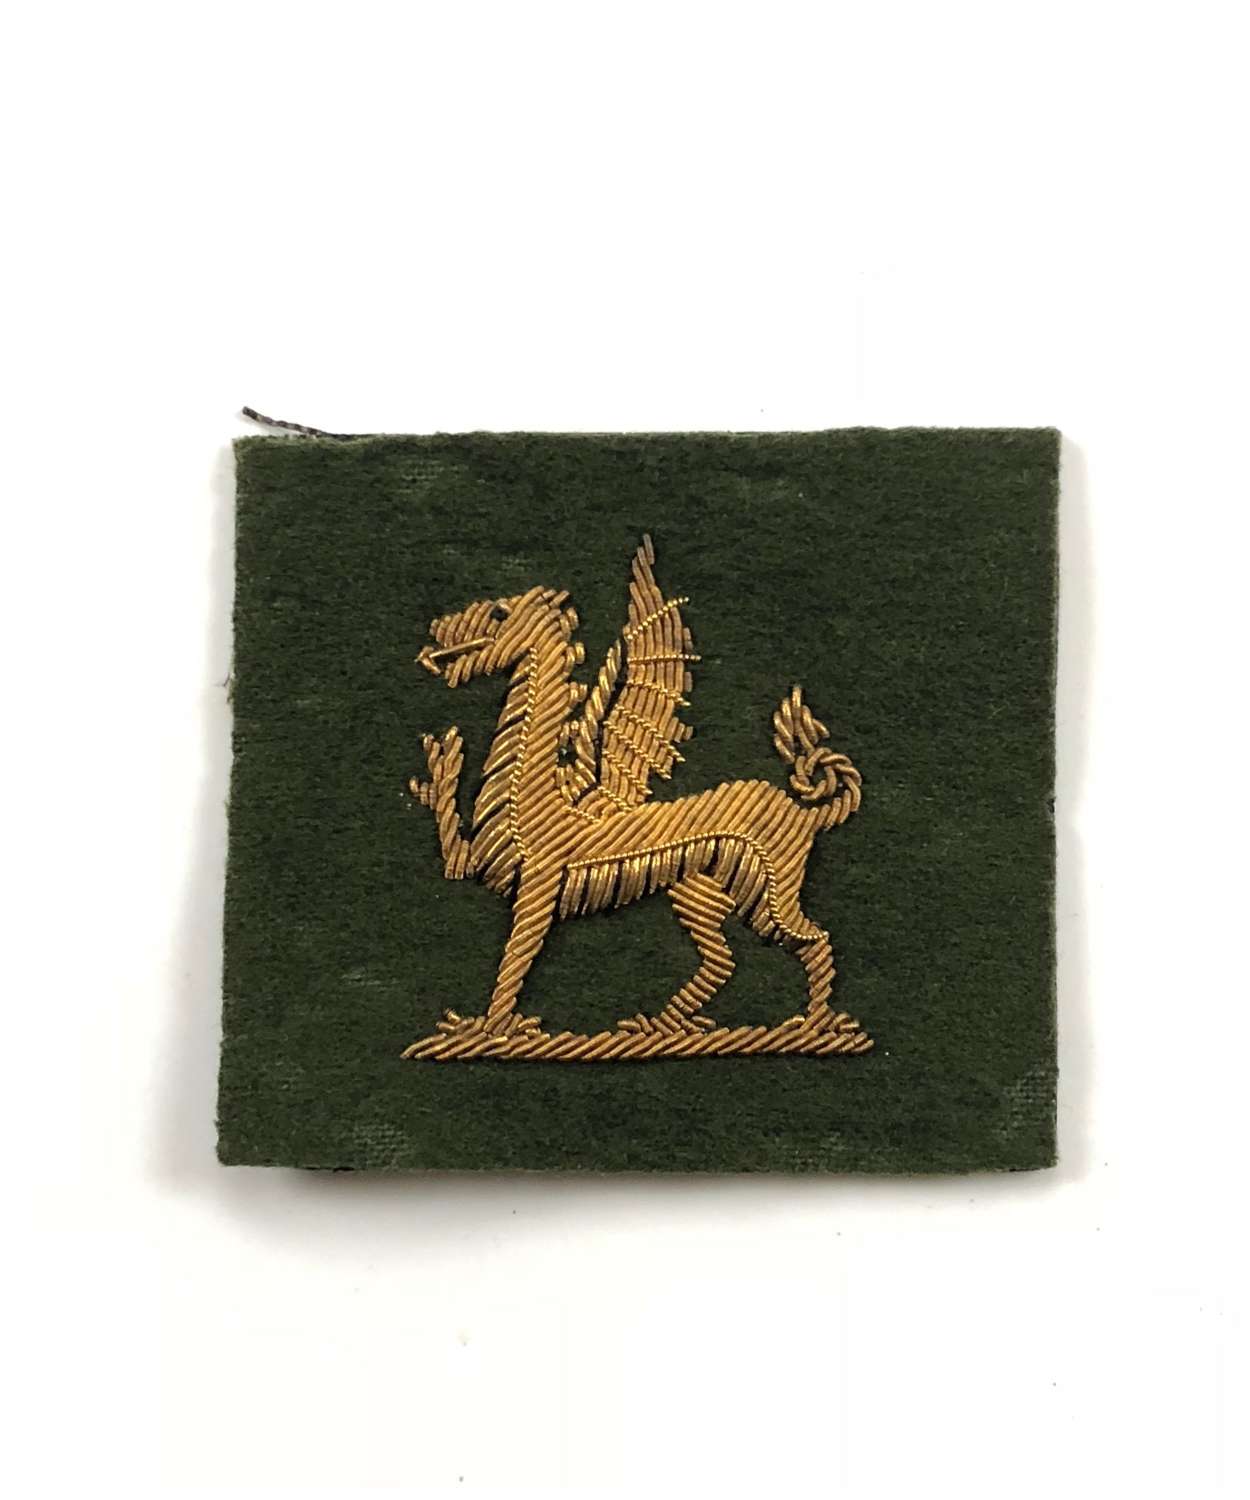 Monmouthshire Regiment Officer’s Bullion Cap Badge.